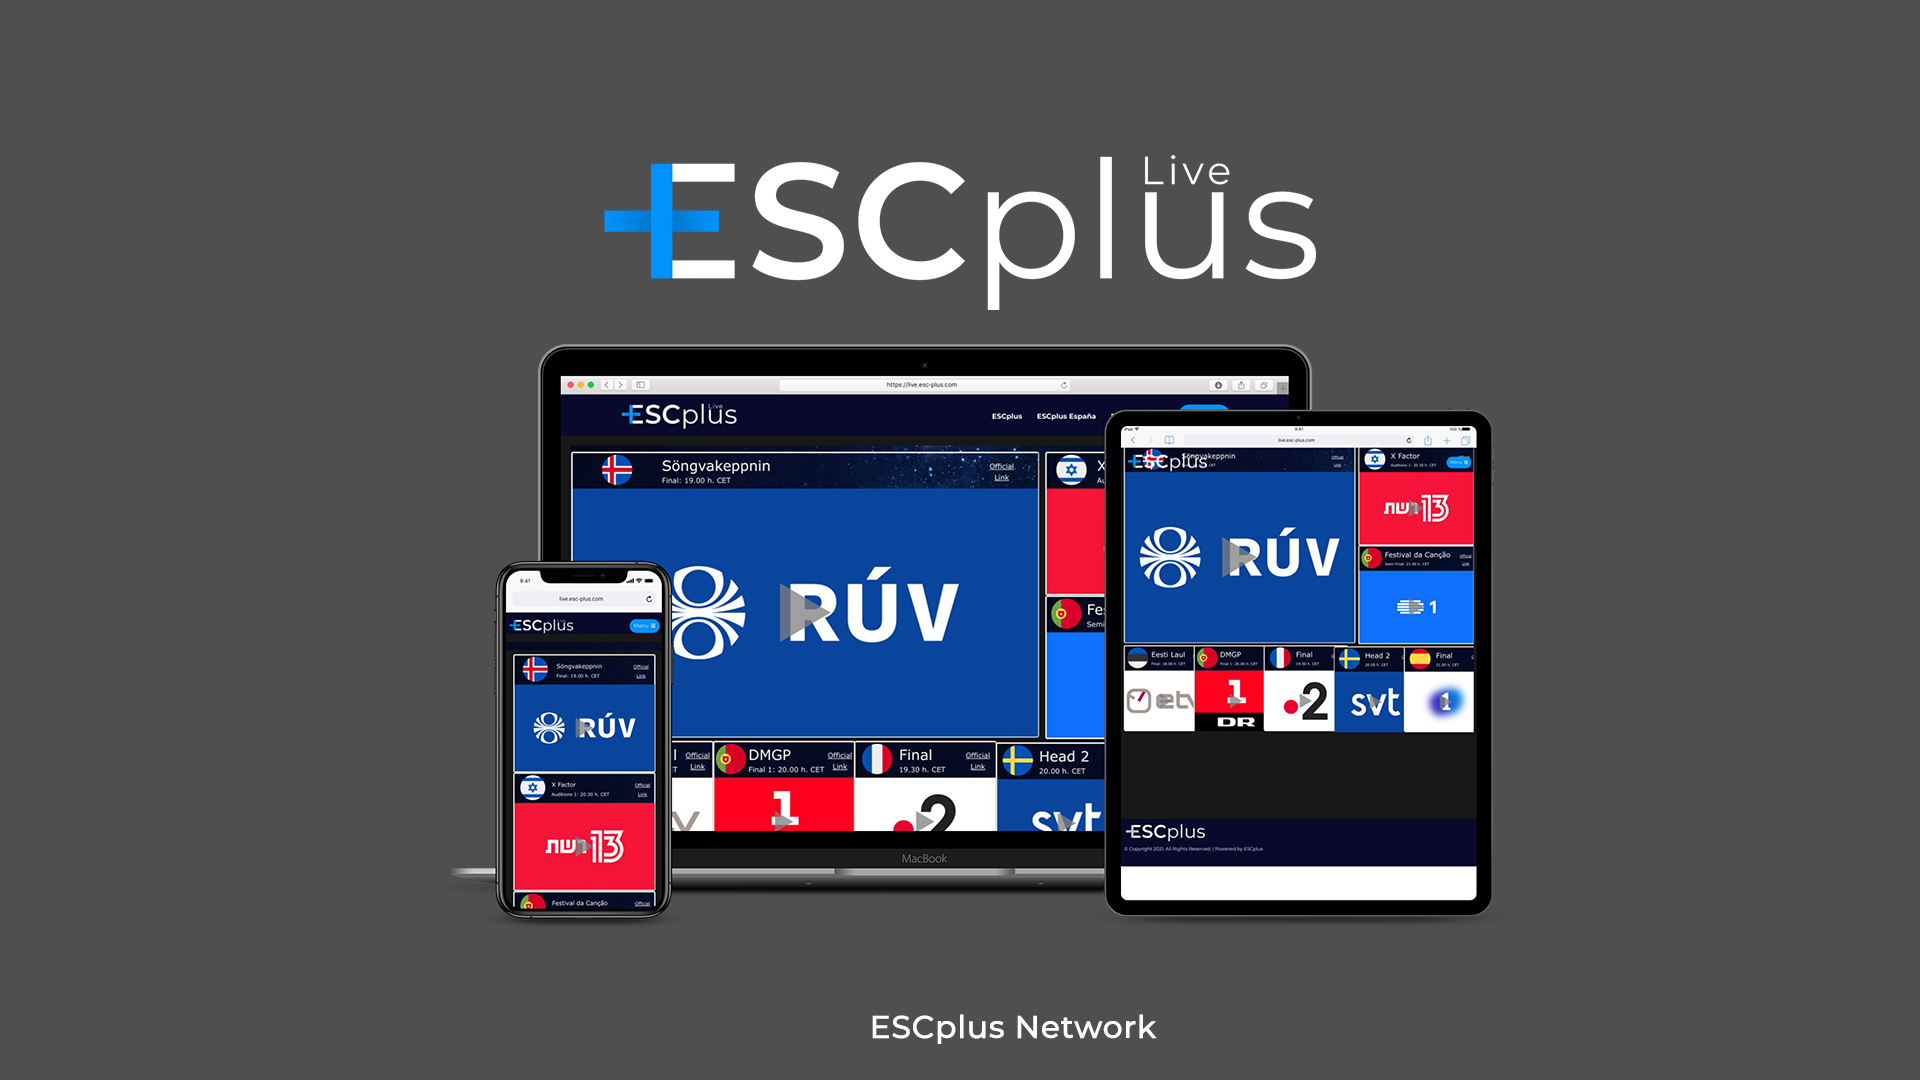 Presenting “ESCplus Live: Multi-window”